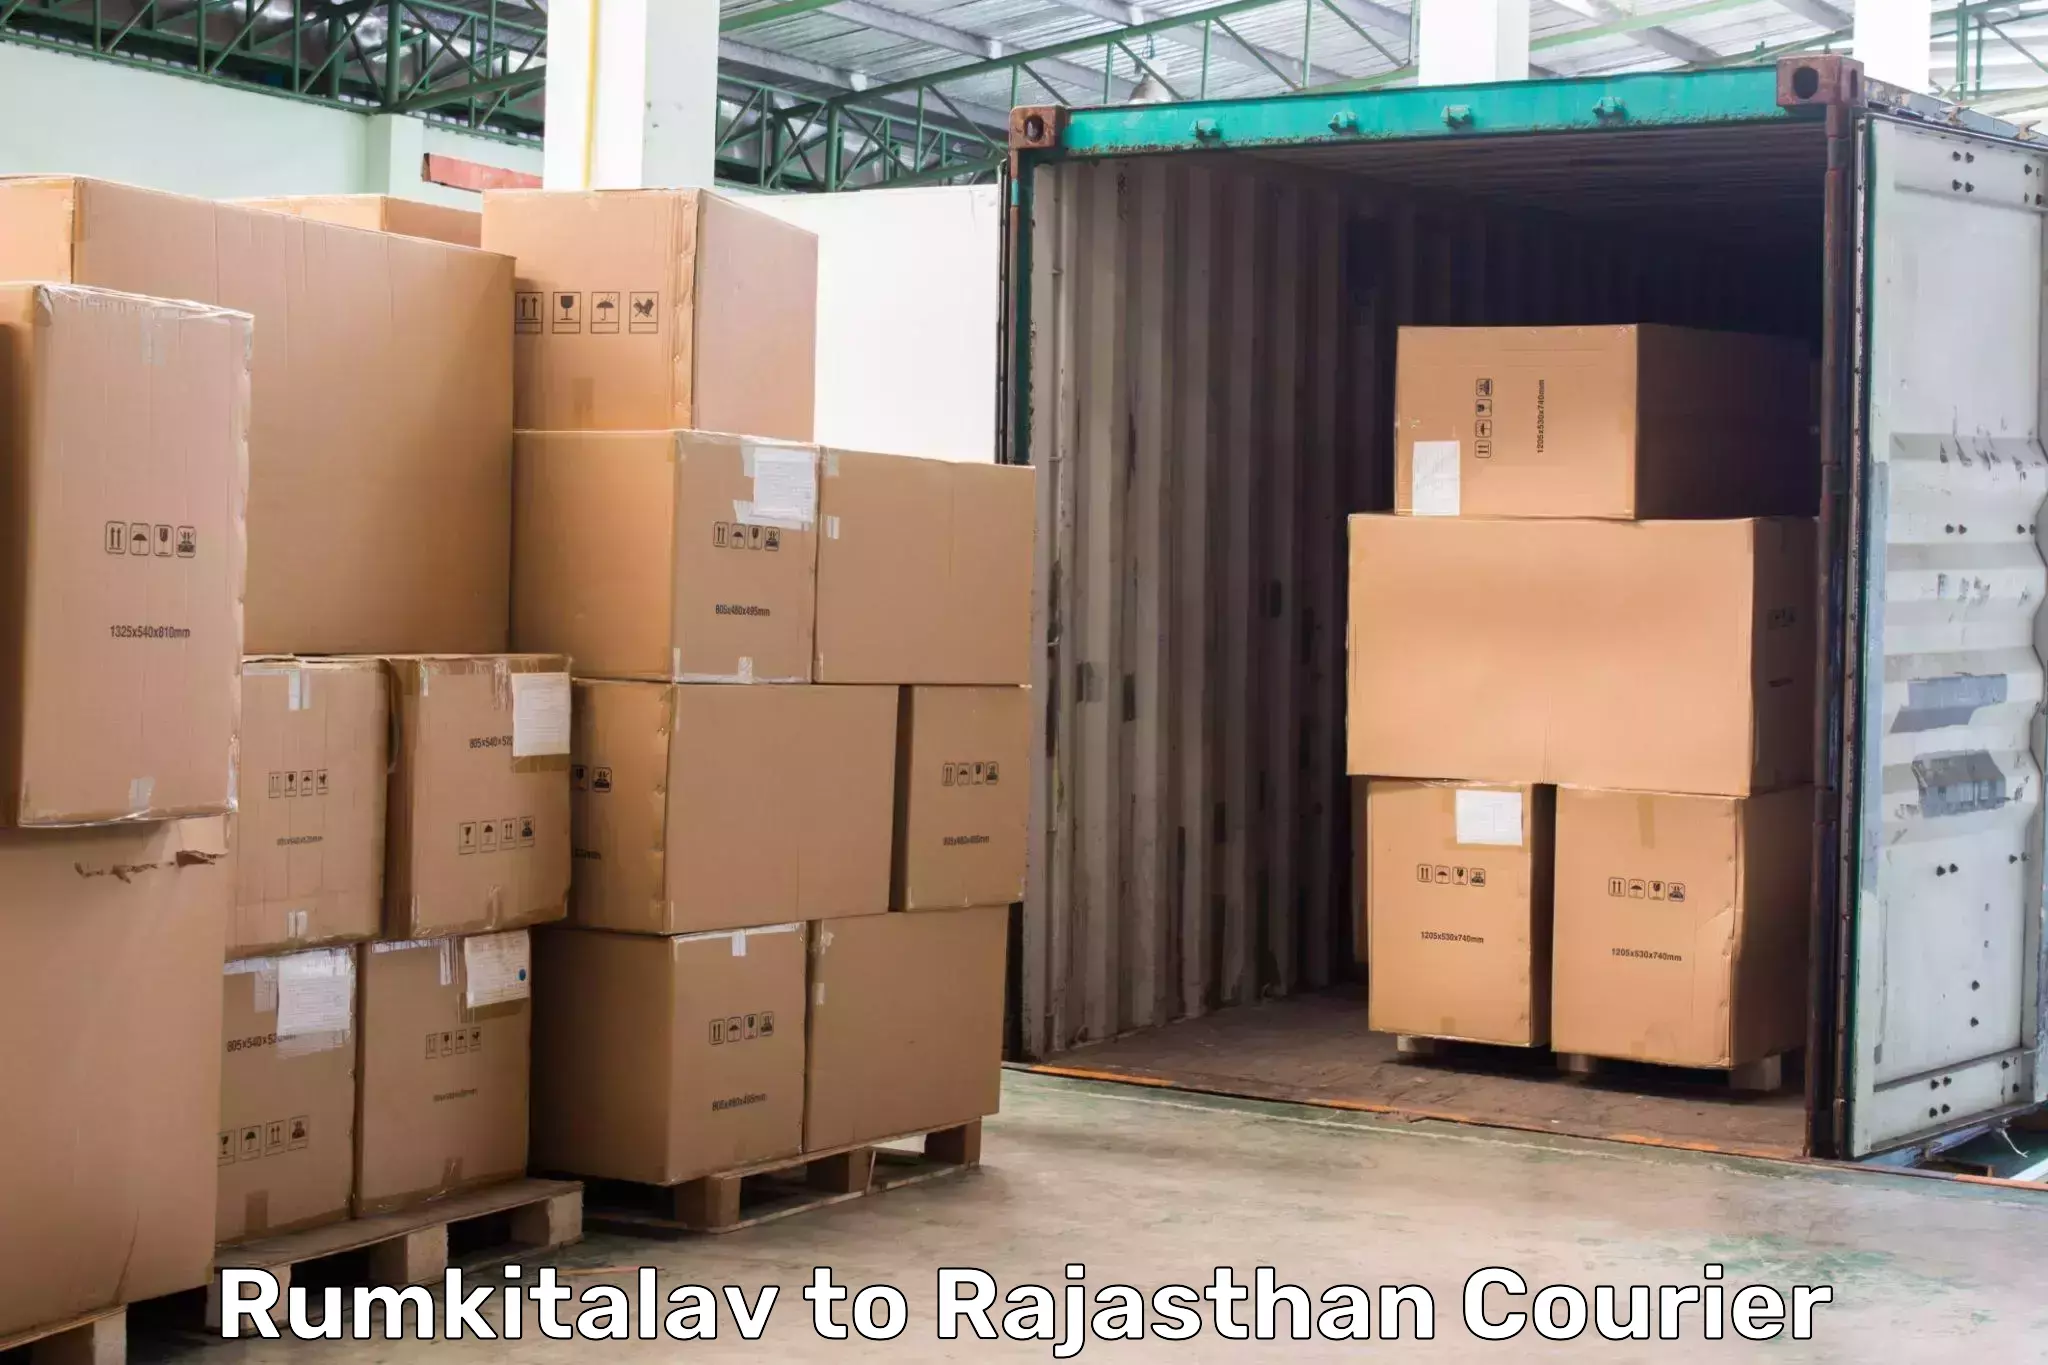 Express delivery capabilities Rumkitalav to Nokha